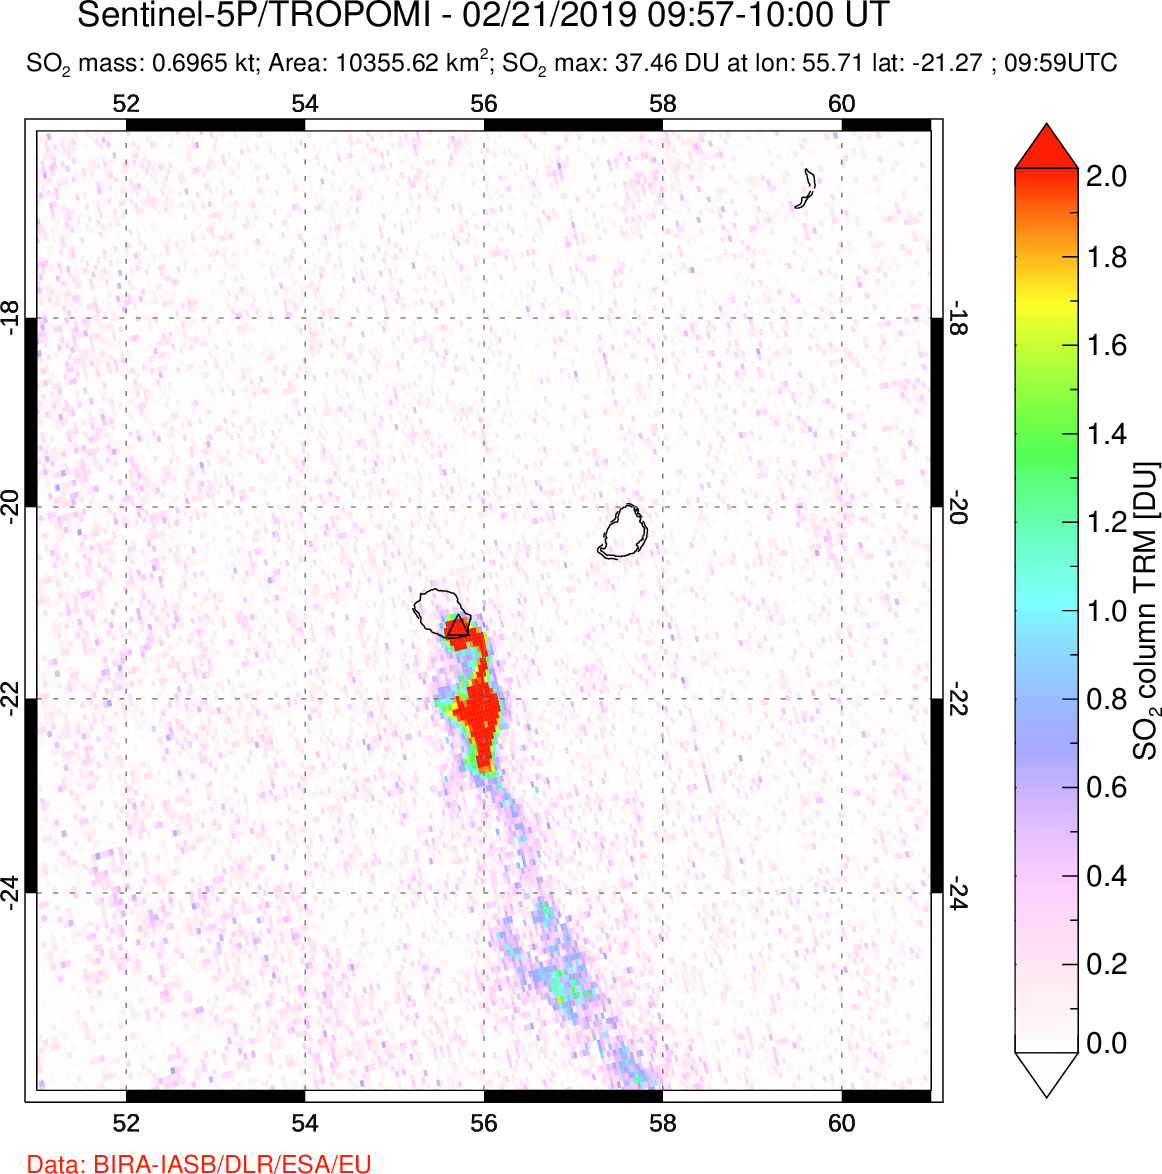 A sulfur dioxide image over Reunion Island, Indian Ocean on Feb 21, 2019.